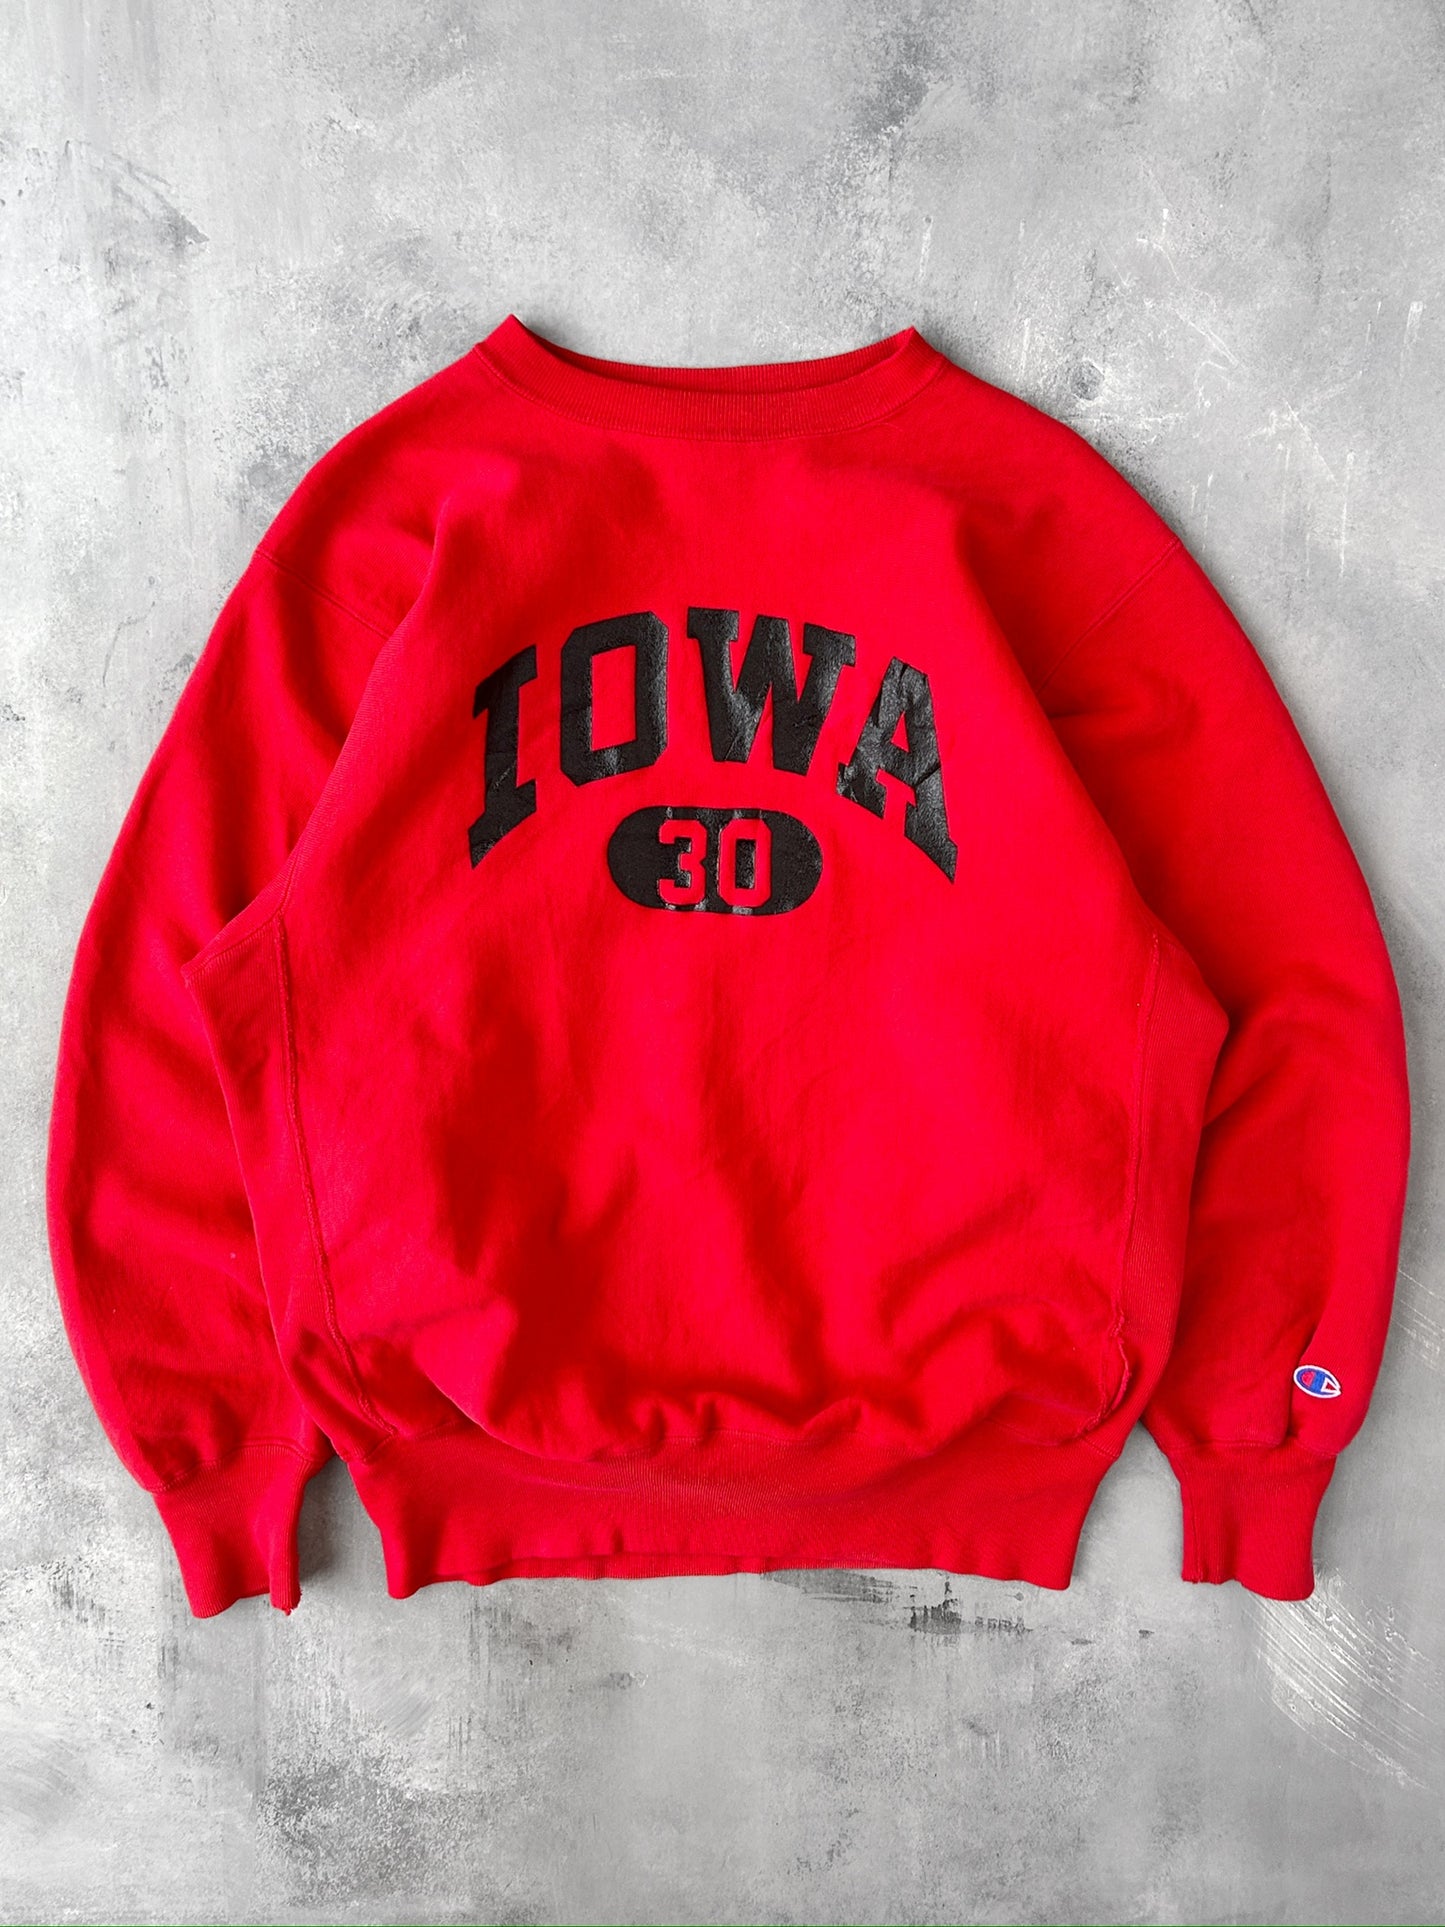 Iowa State University Sweatshirt 90's - XL